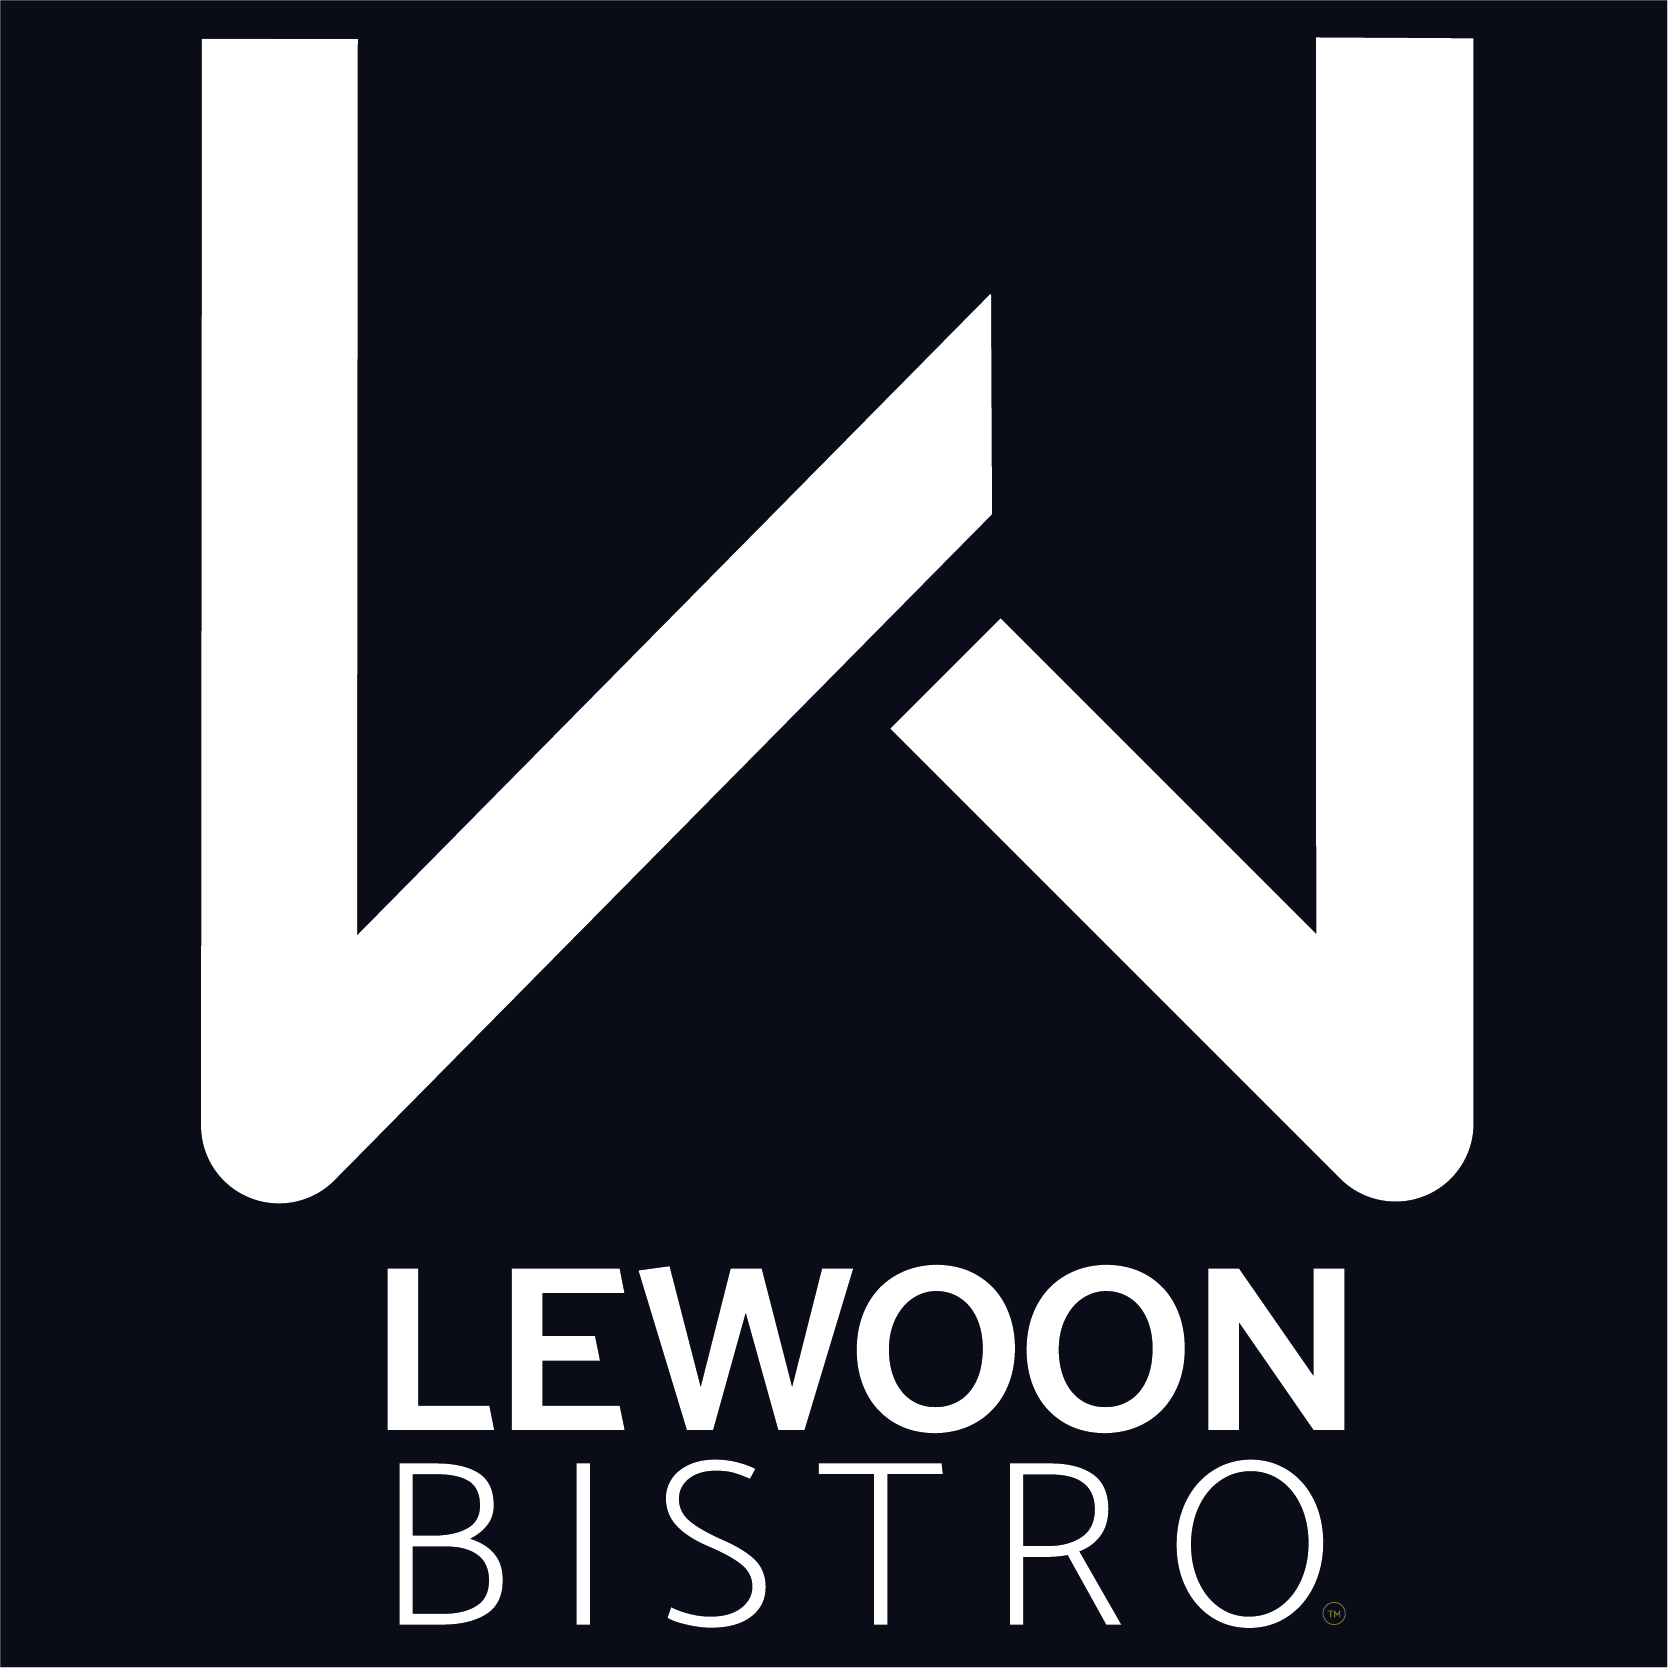 Lewoon Bistro